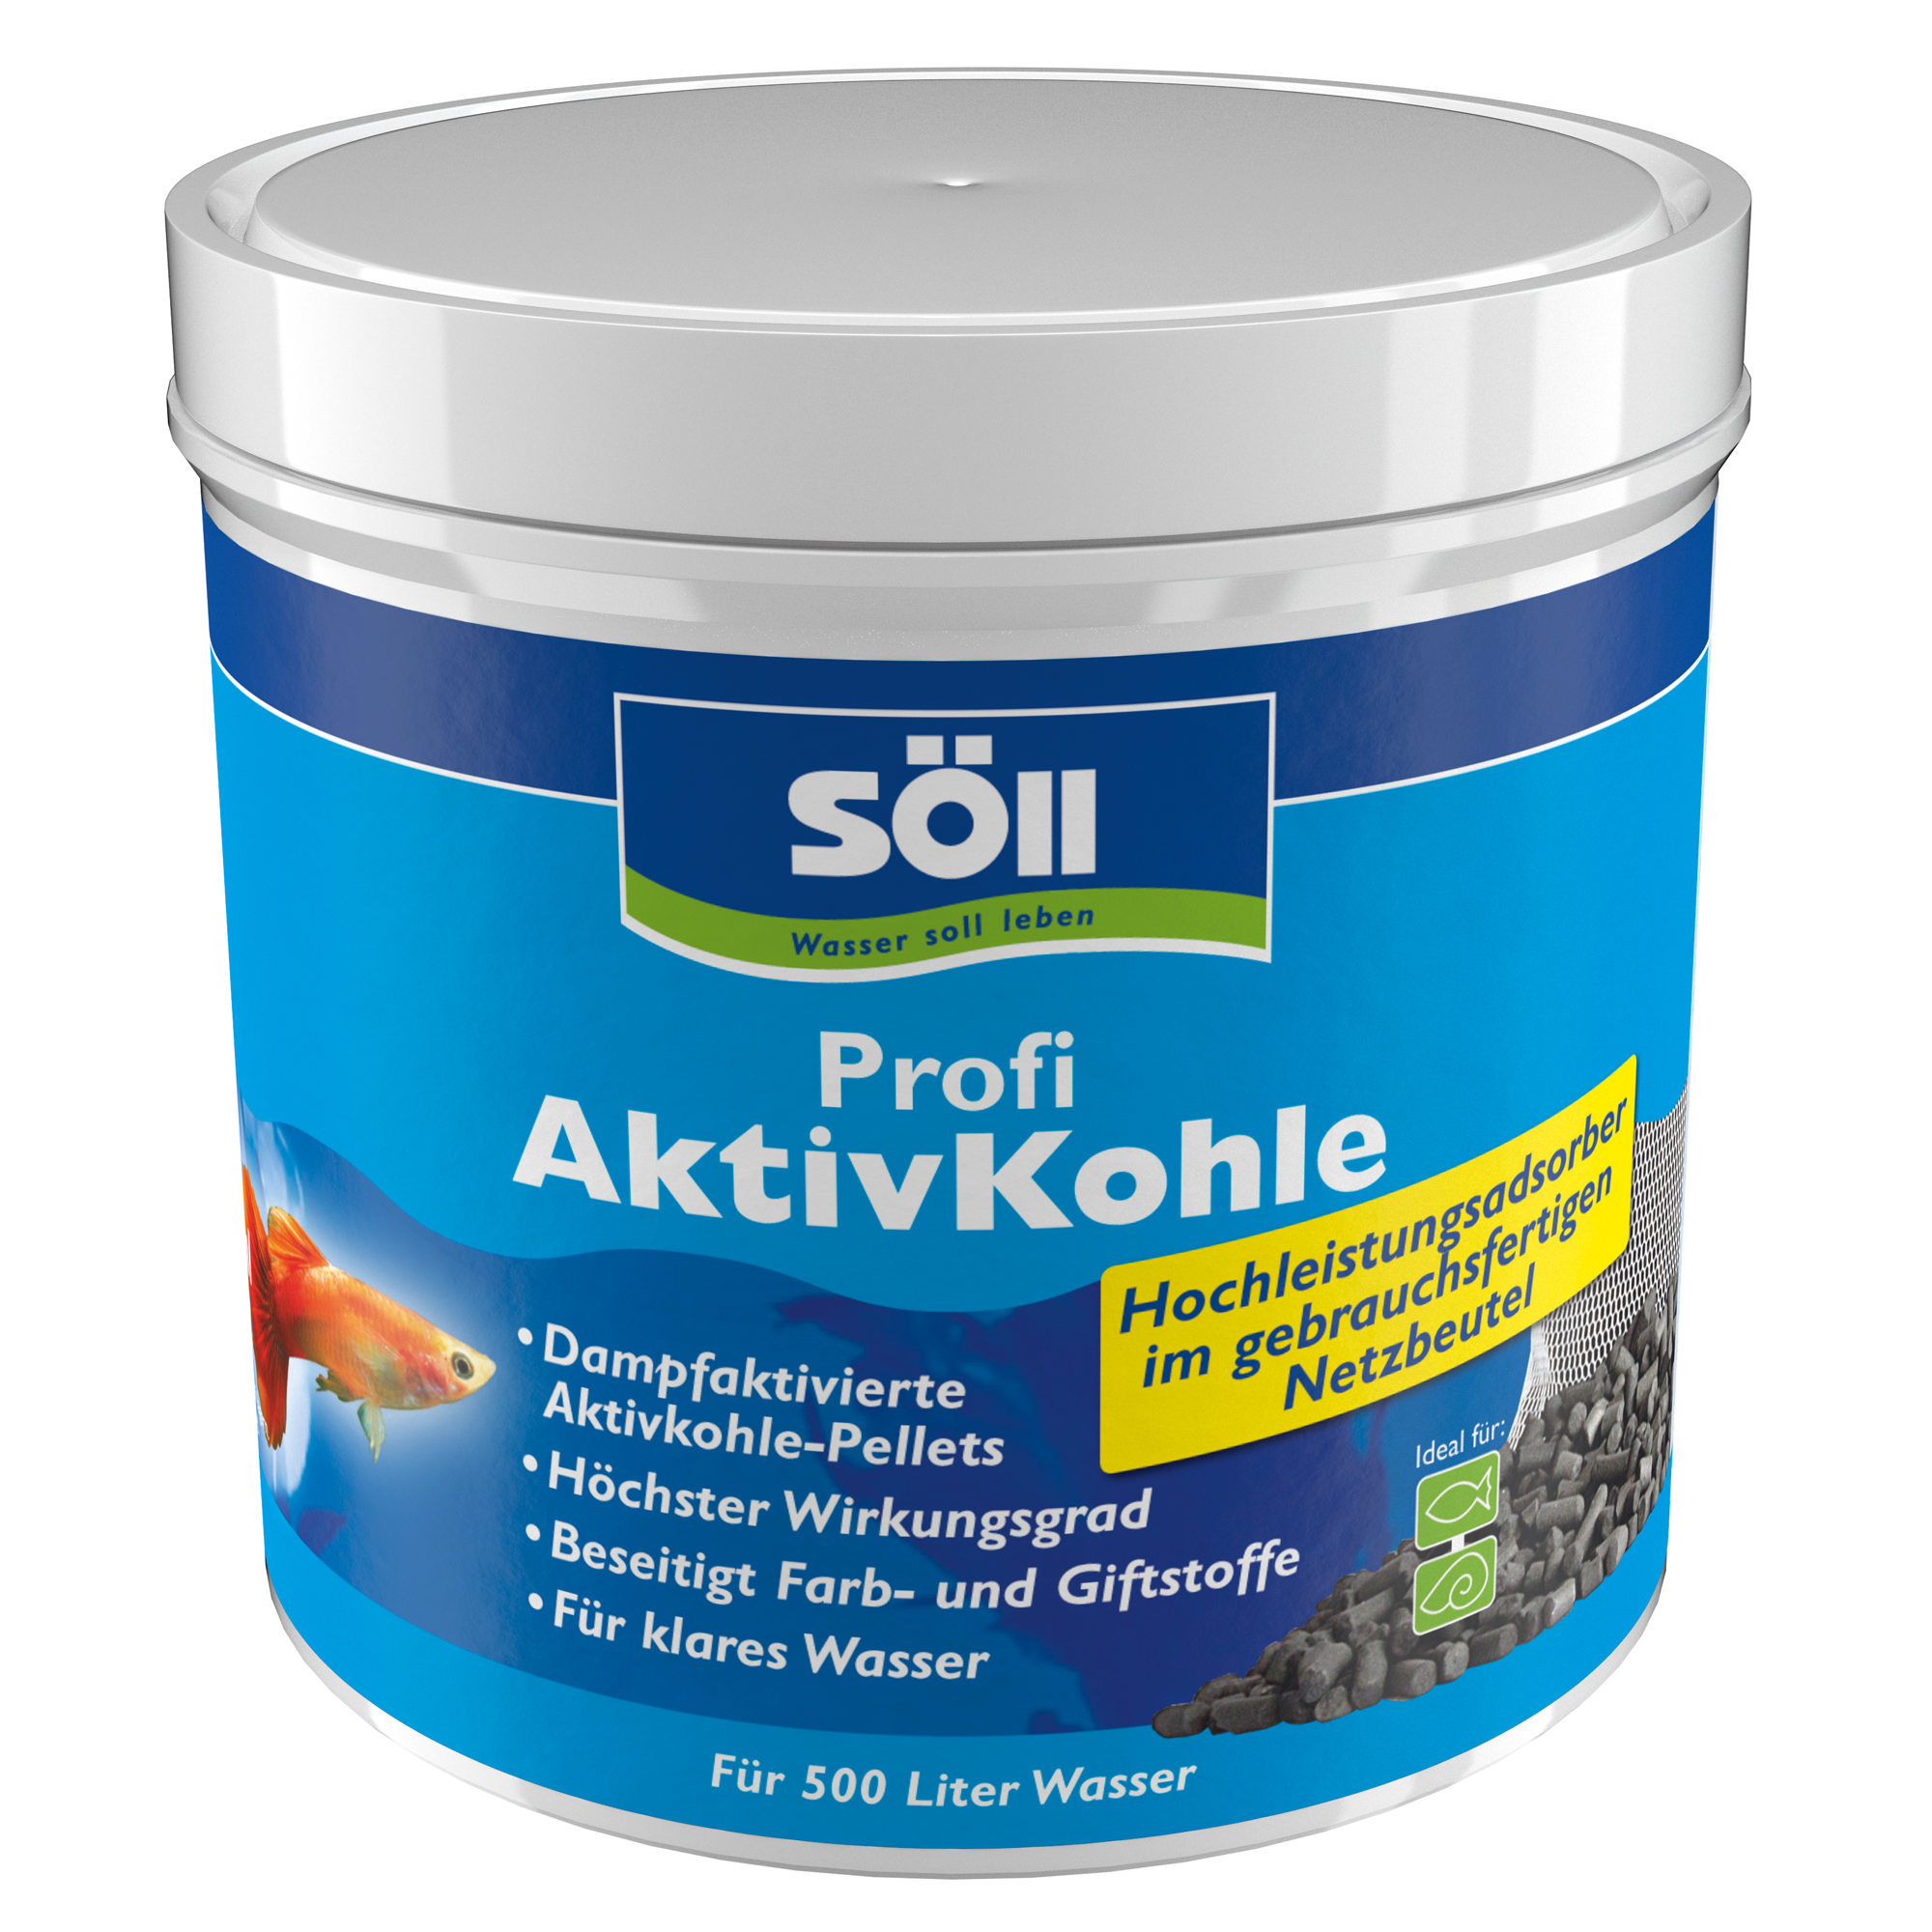 Profi AktivKohle 500 ml + product picture